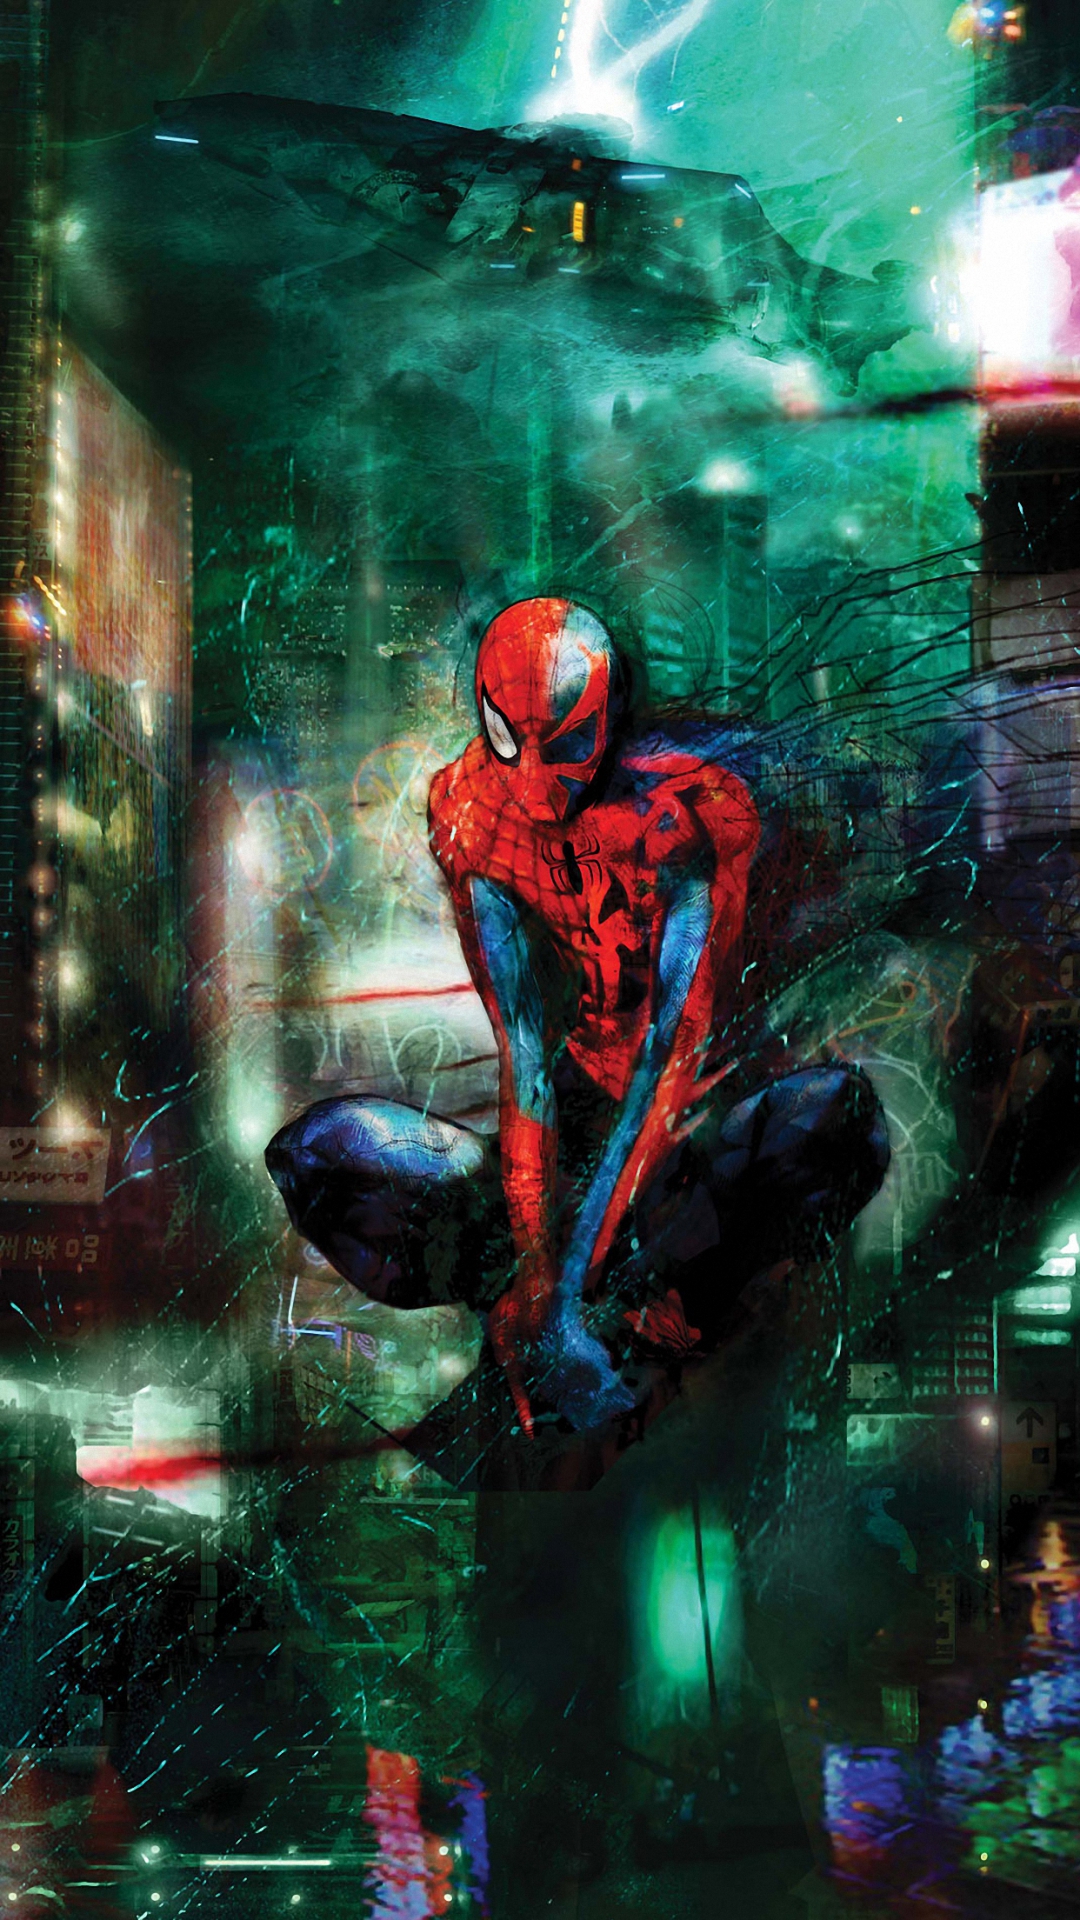 spiderman wallpaper,superhero,action adventure game,fictional character,spider man